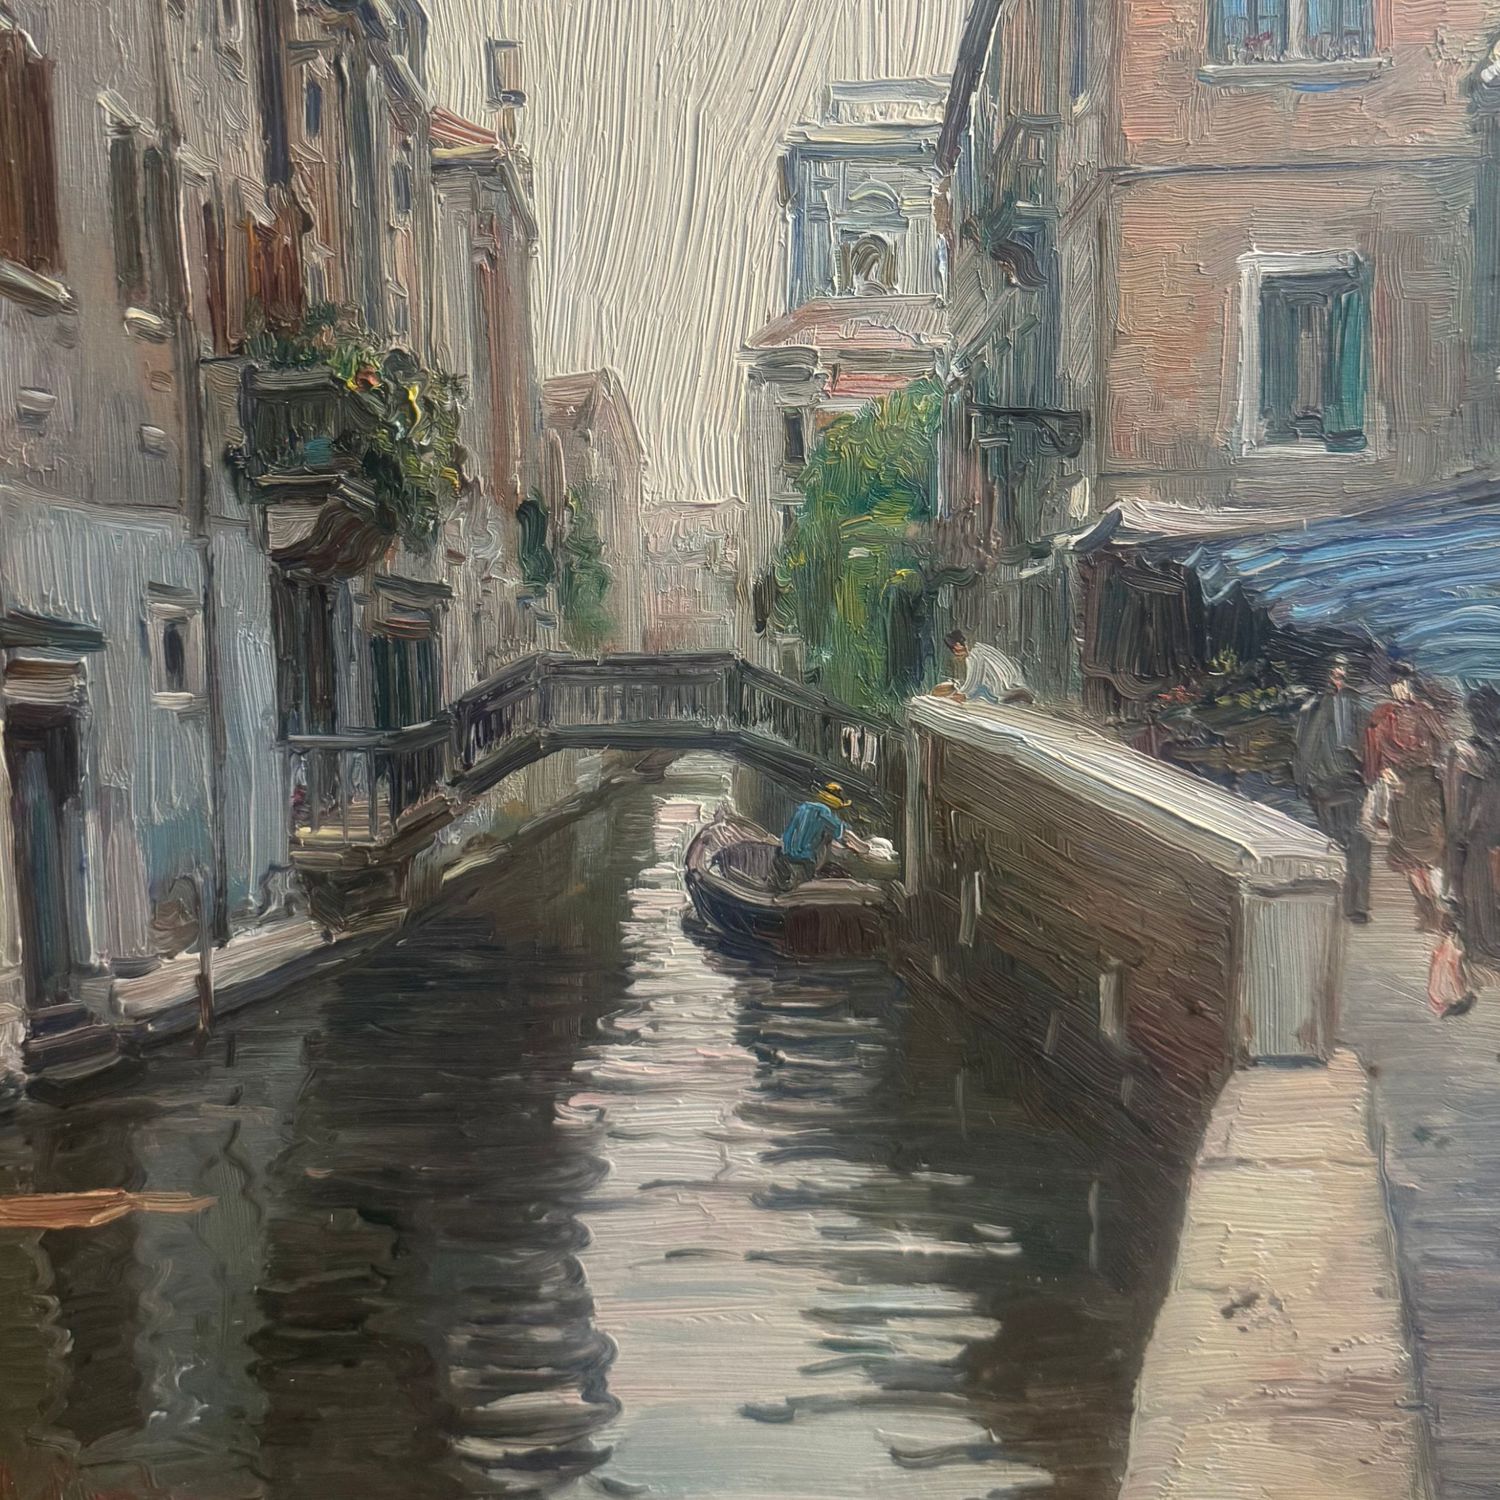 Venice - A. Martucci - Image 3 of 6